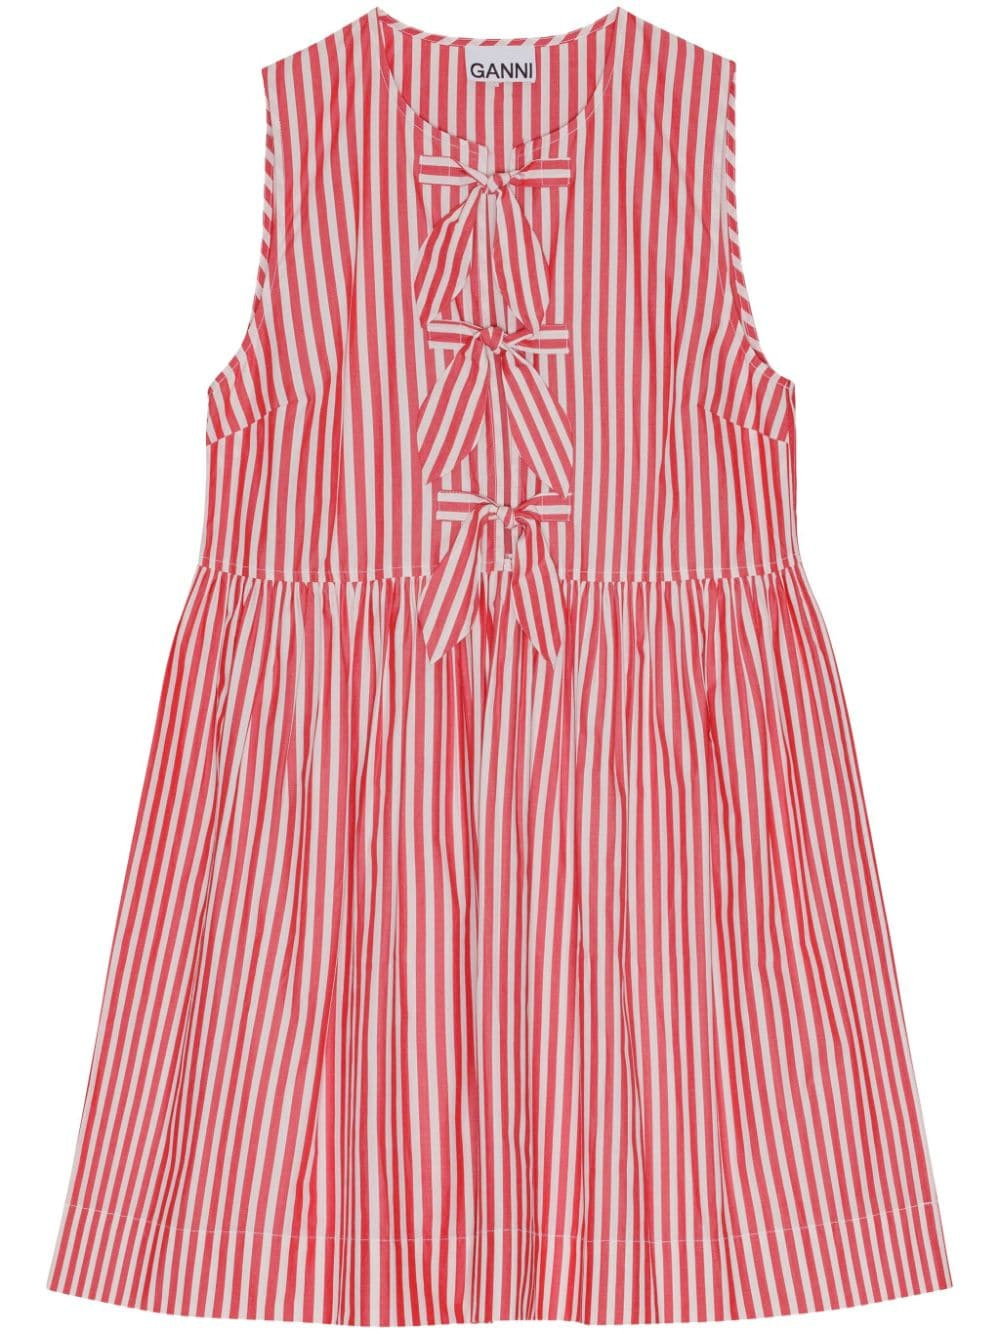 Image 1 of GANNI striped sleeveless dress